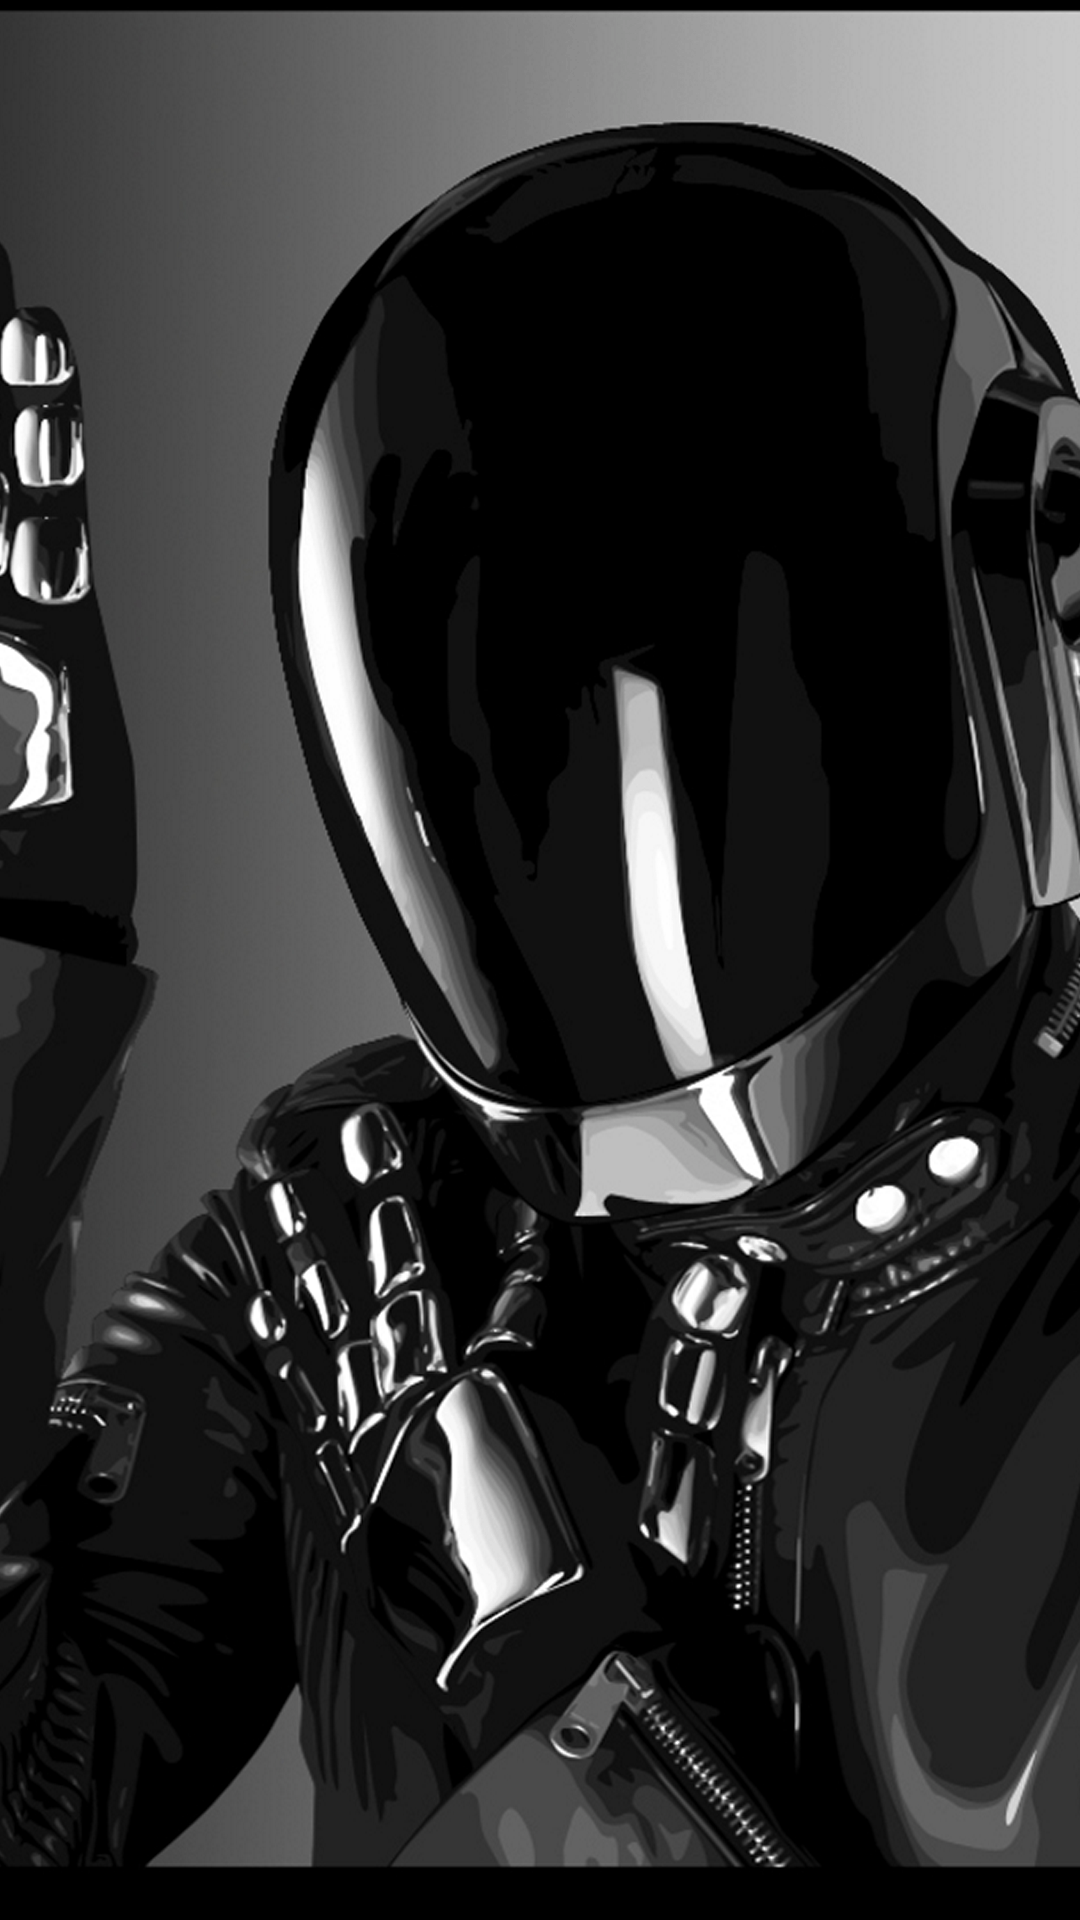 Daft Punk Shiny Helmet Black Costume Android Wallpaper free download